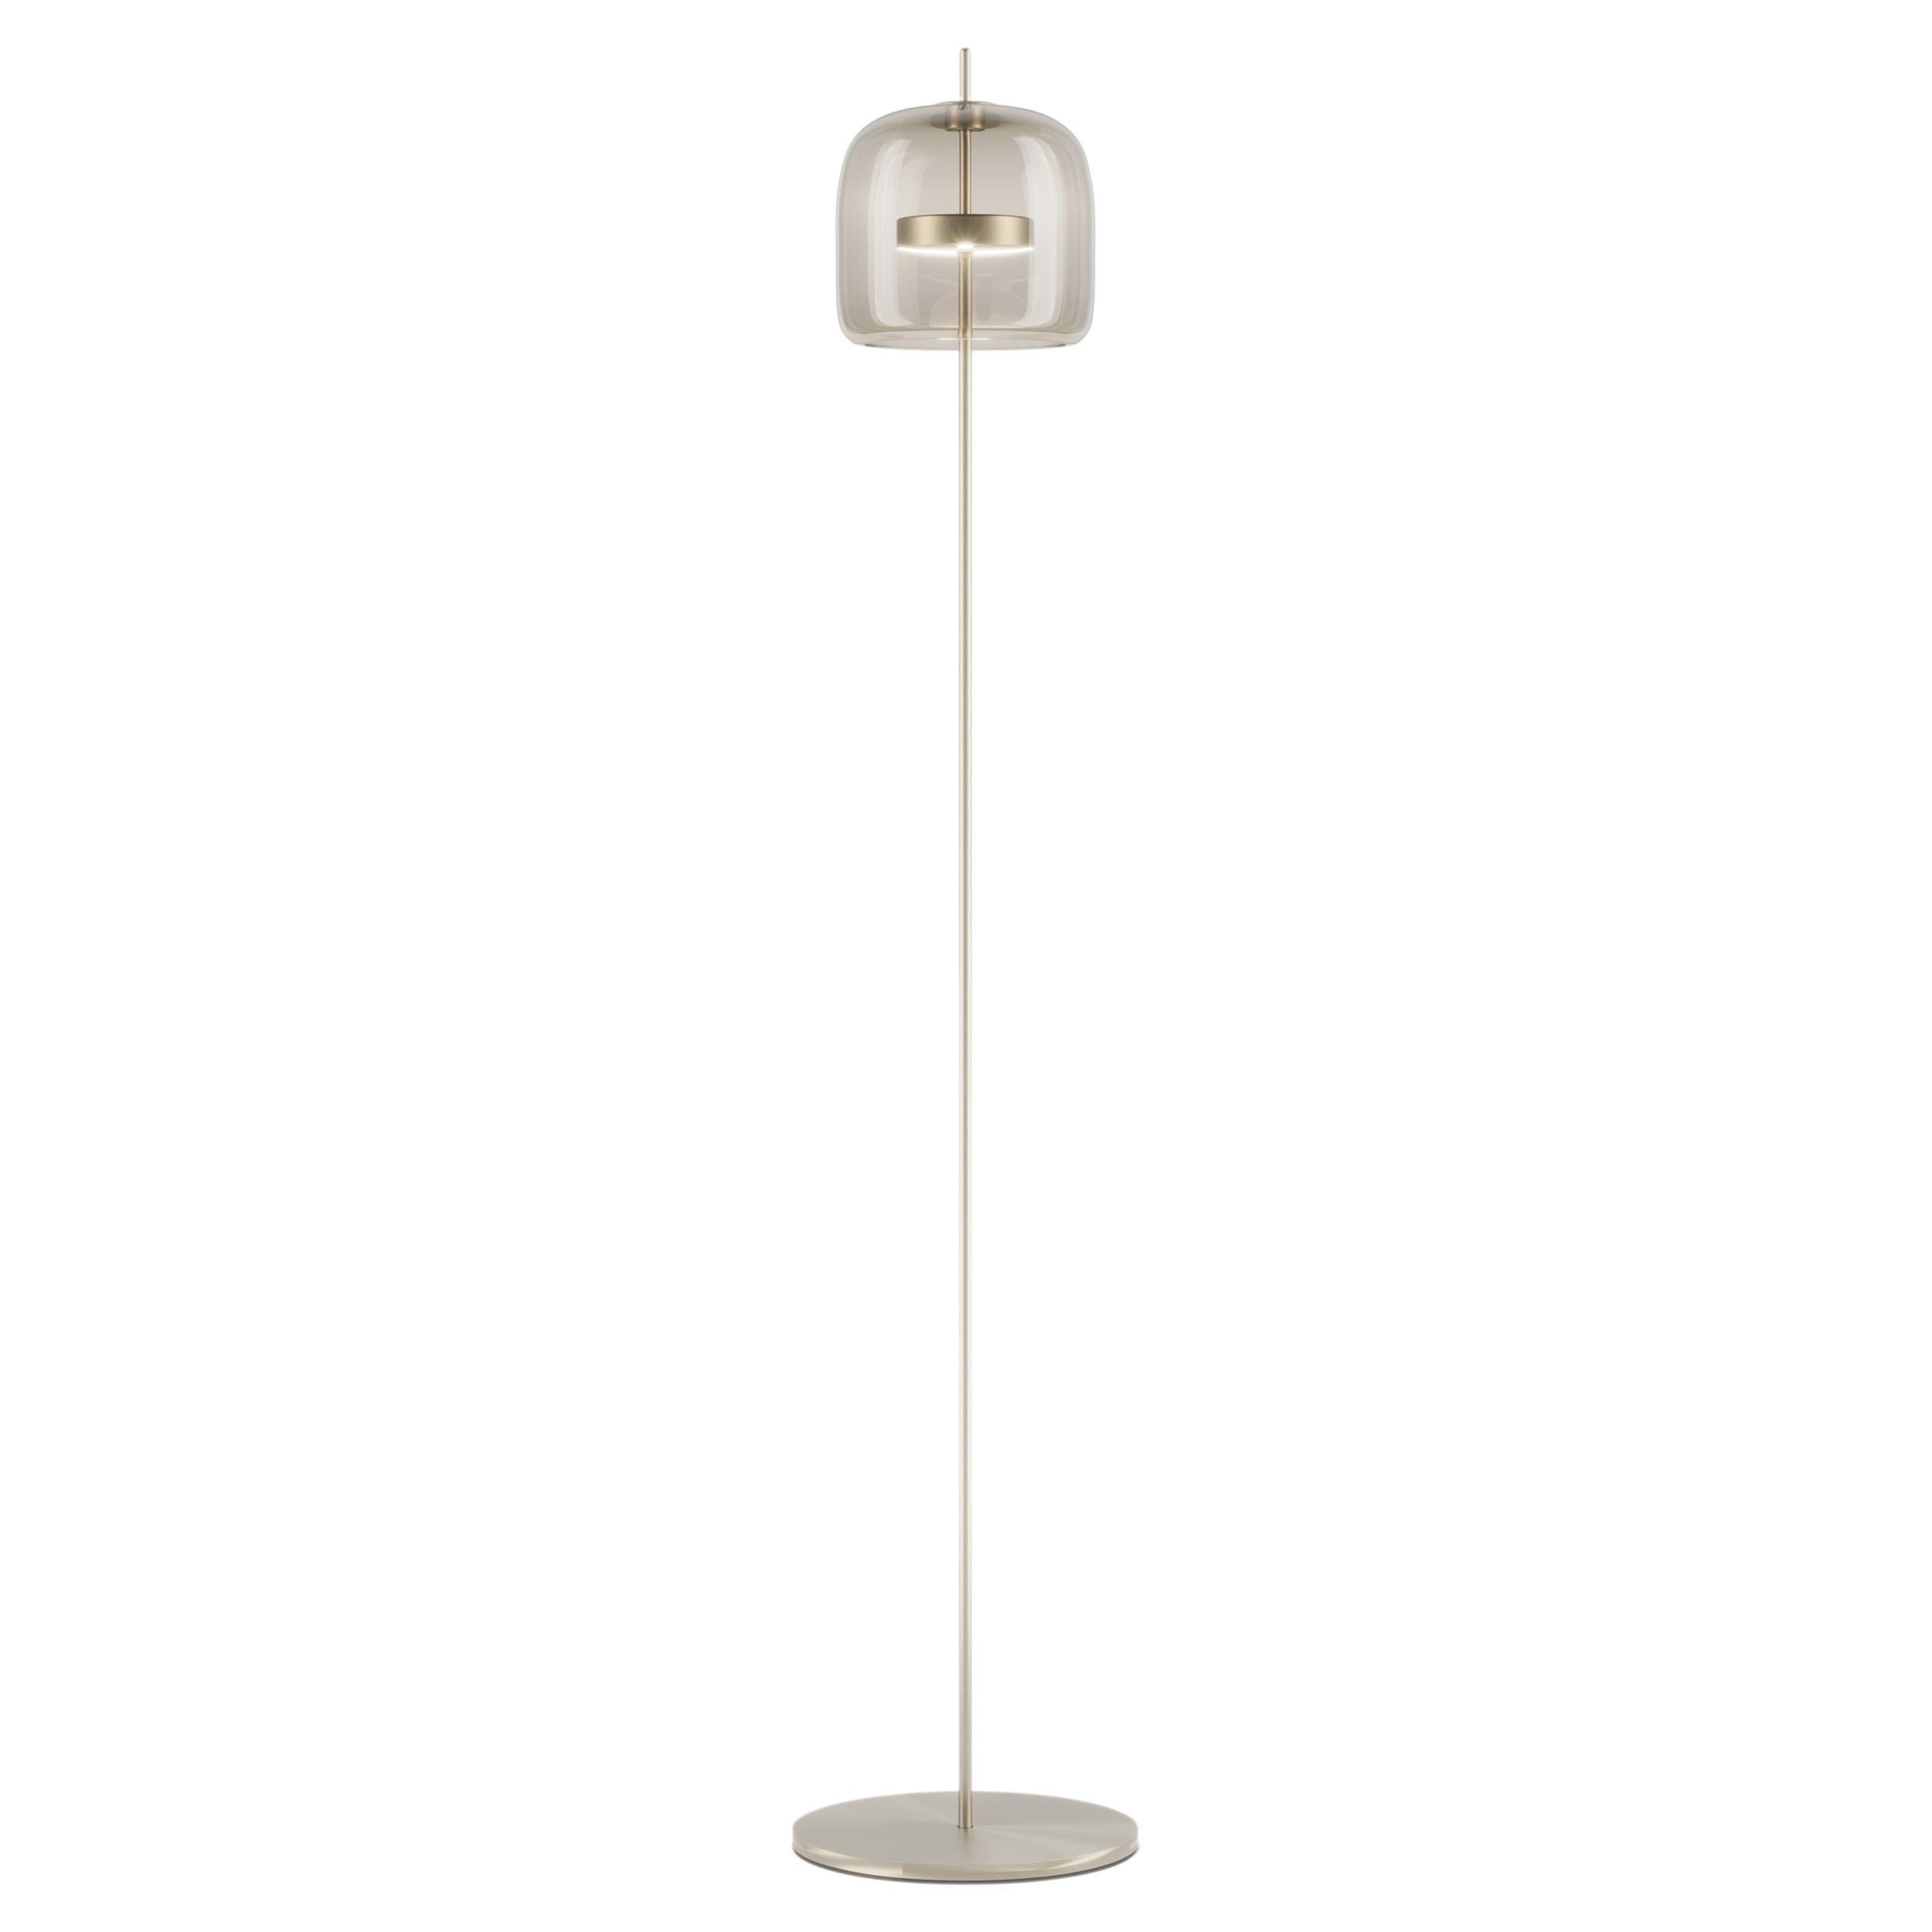 Vistosi Jube Floor Lamp in Smoky Transparent Glass With Matt Steel Finish For Sale